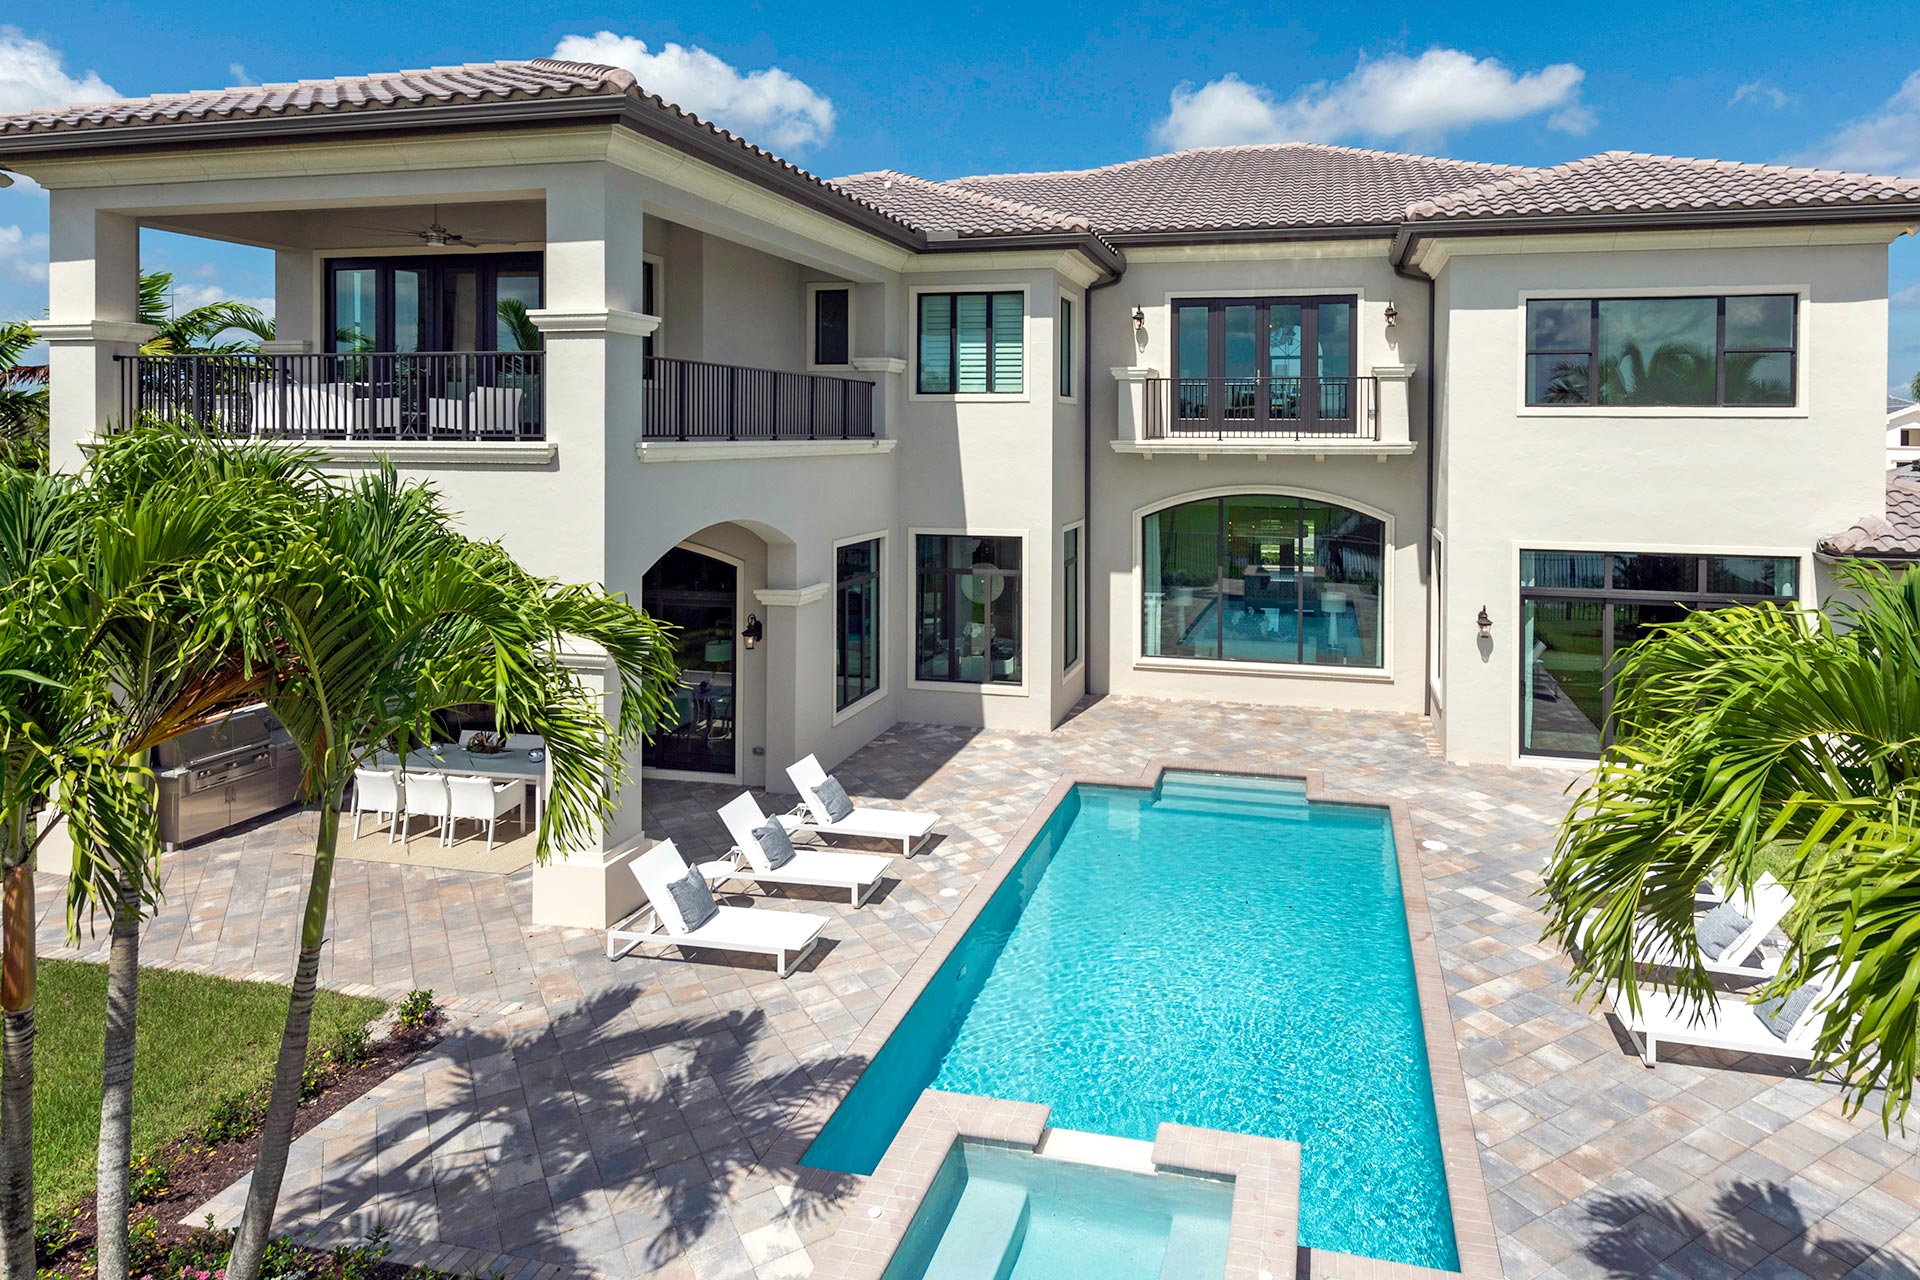  Homes  for Sale in Boca  Raton  Florida  Florida  Real Estate  